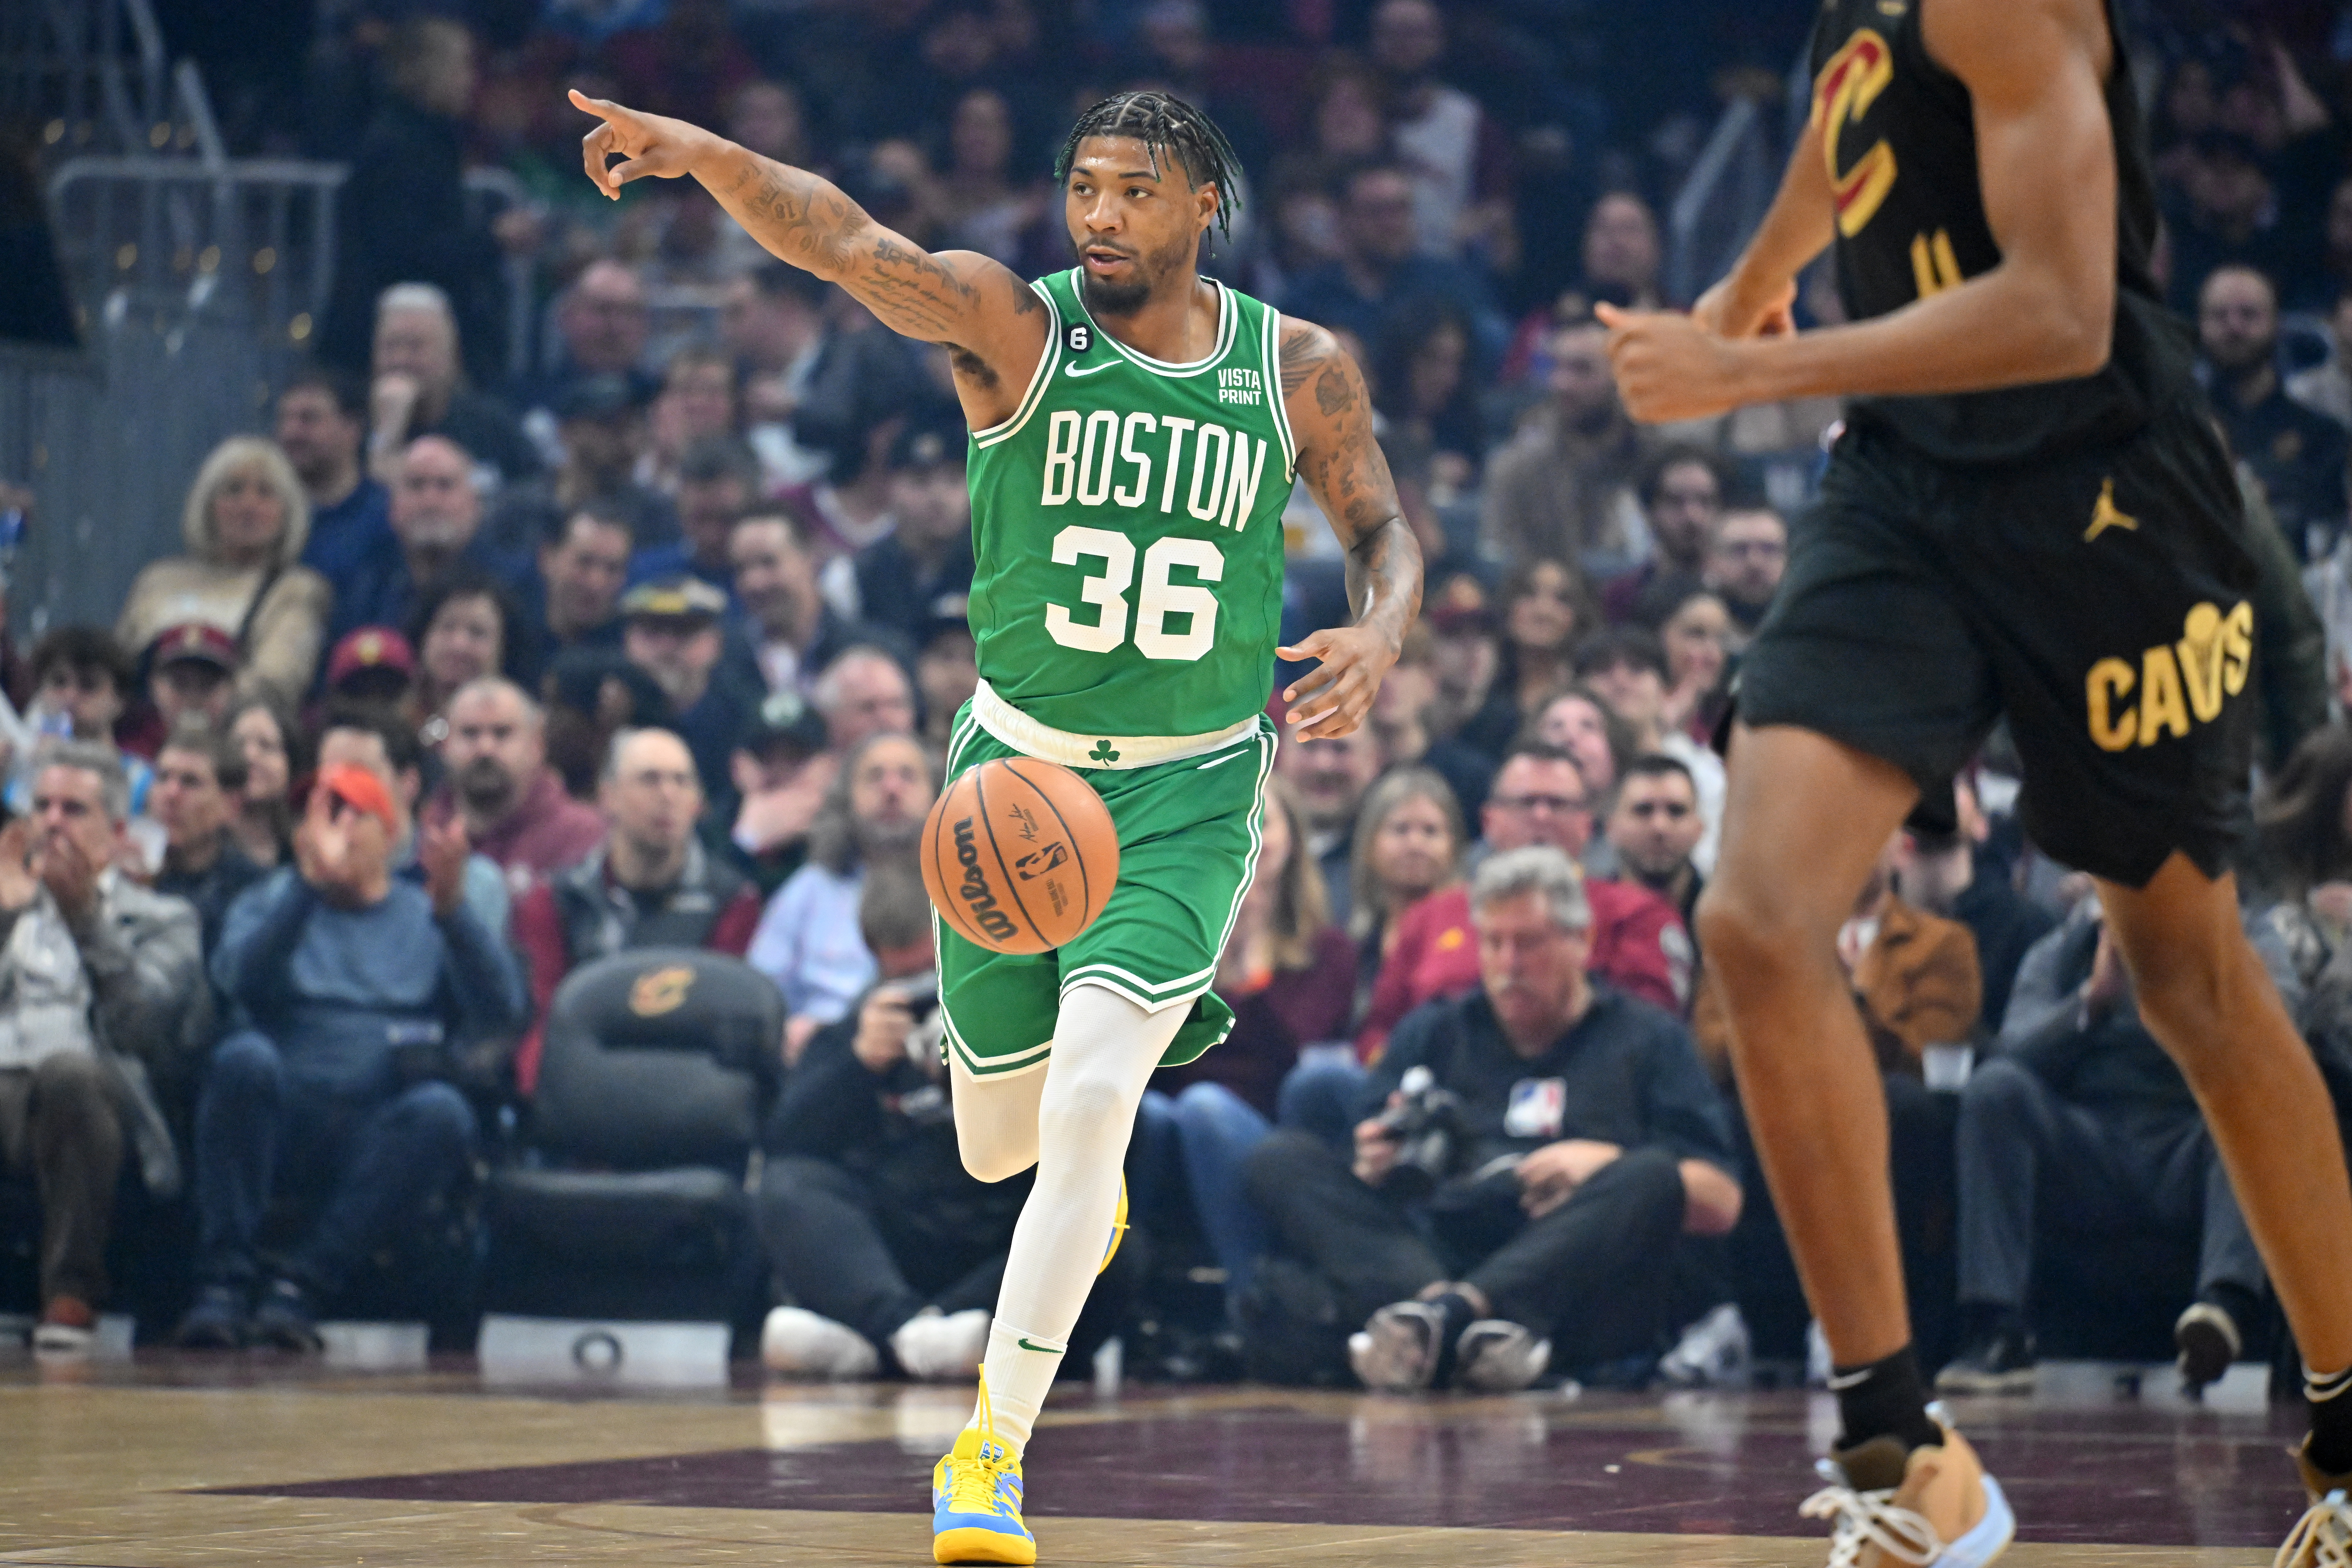 Boston Celtics v Cleveland Cavaliers